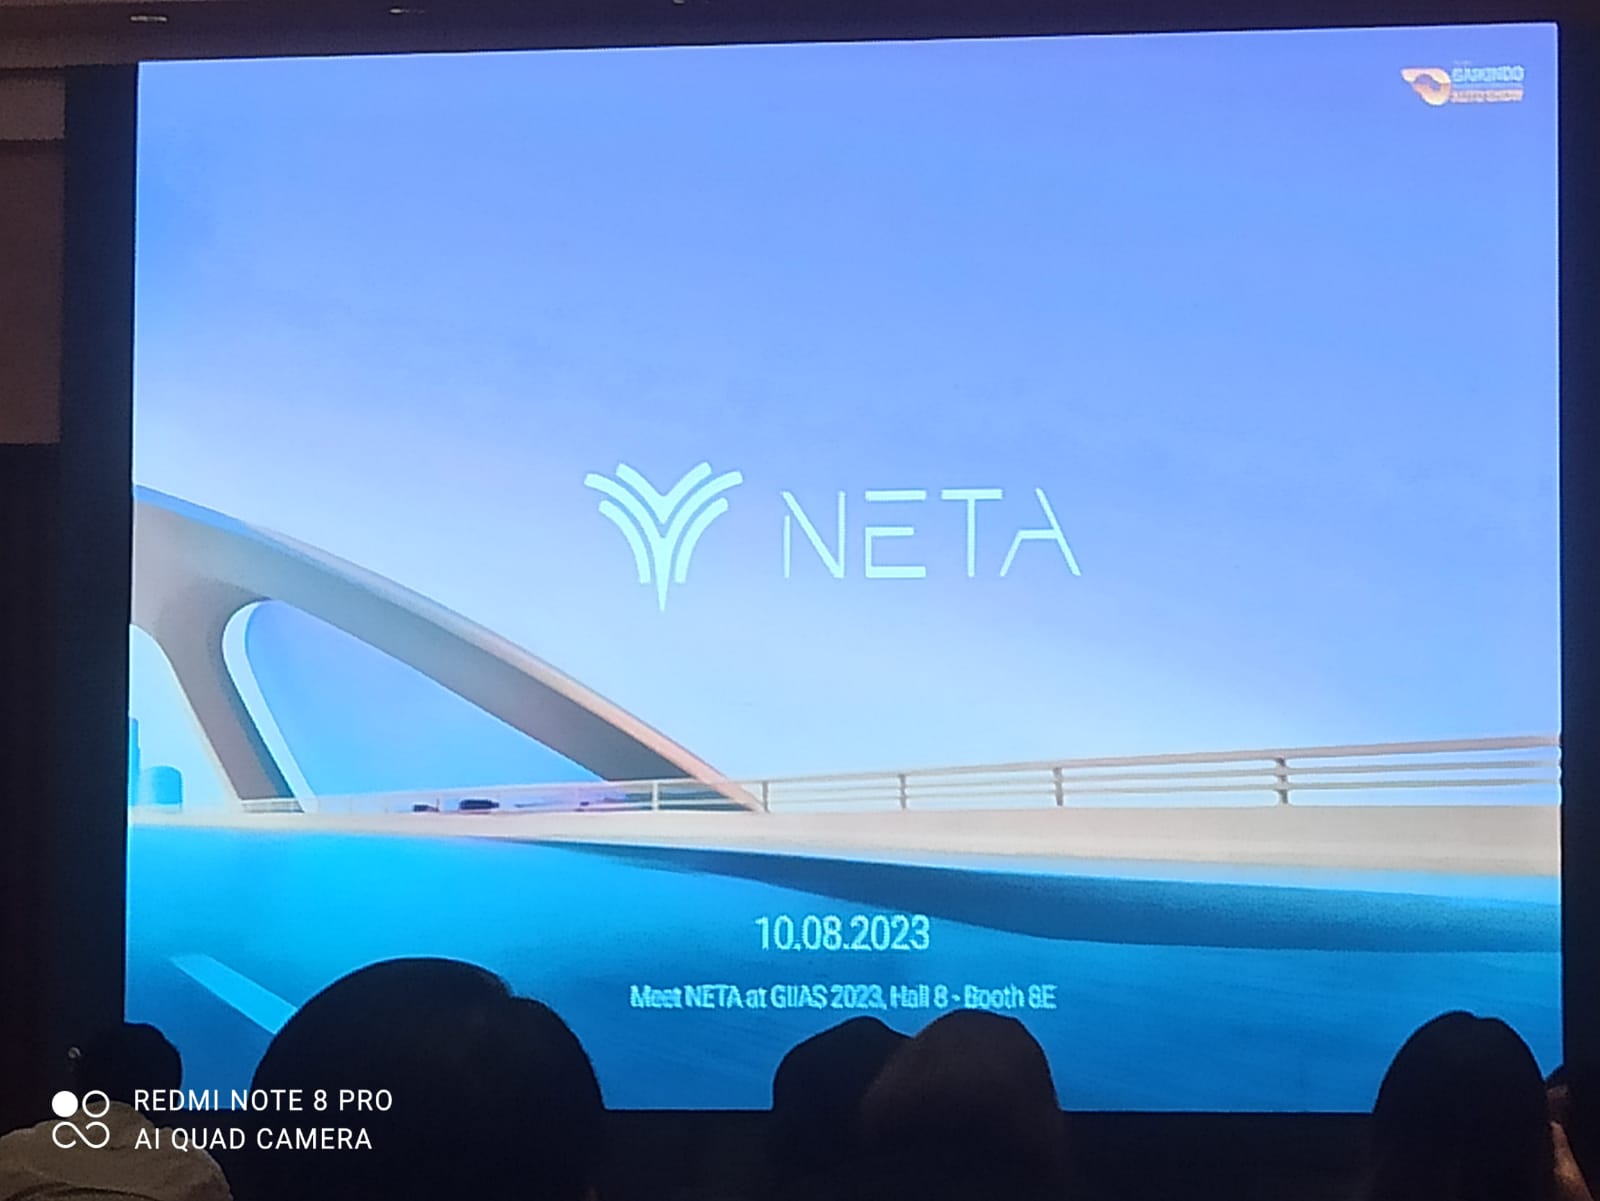 Neta Auto Akan Unjuk Gigi pada Perhelatan GIIAS 2023